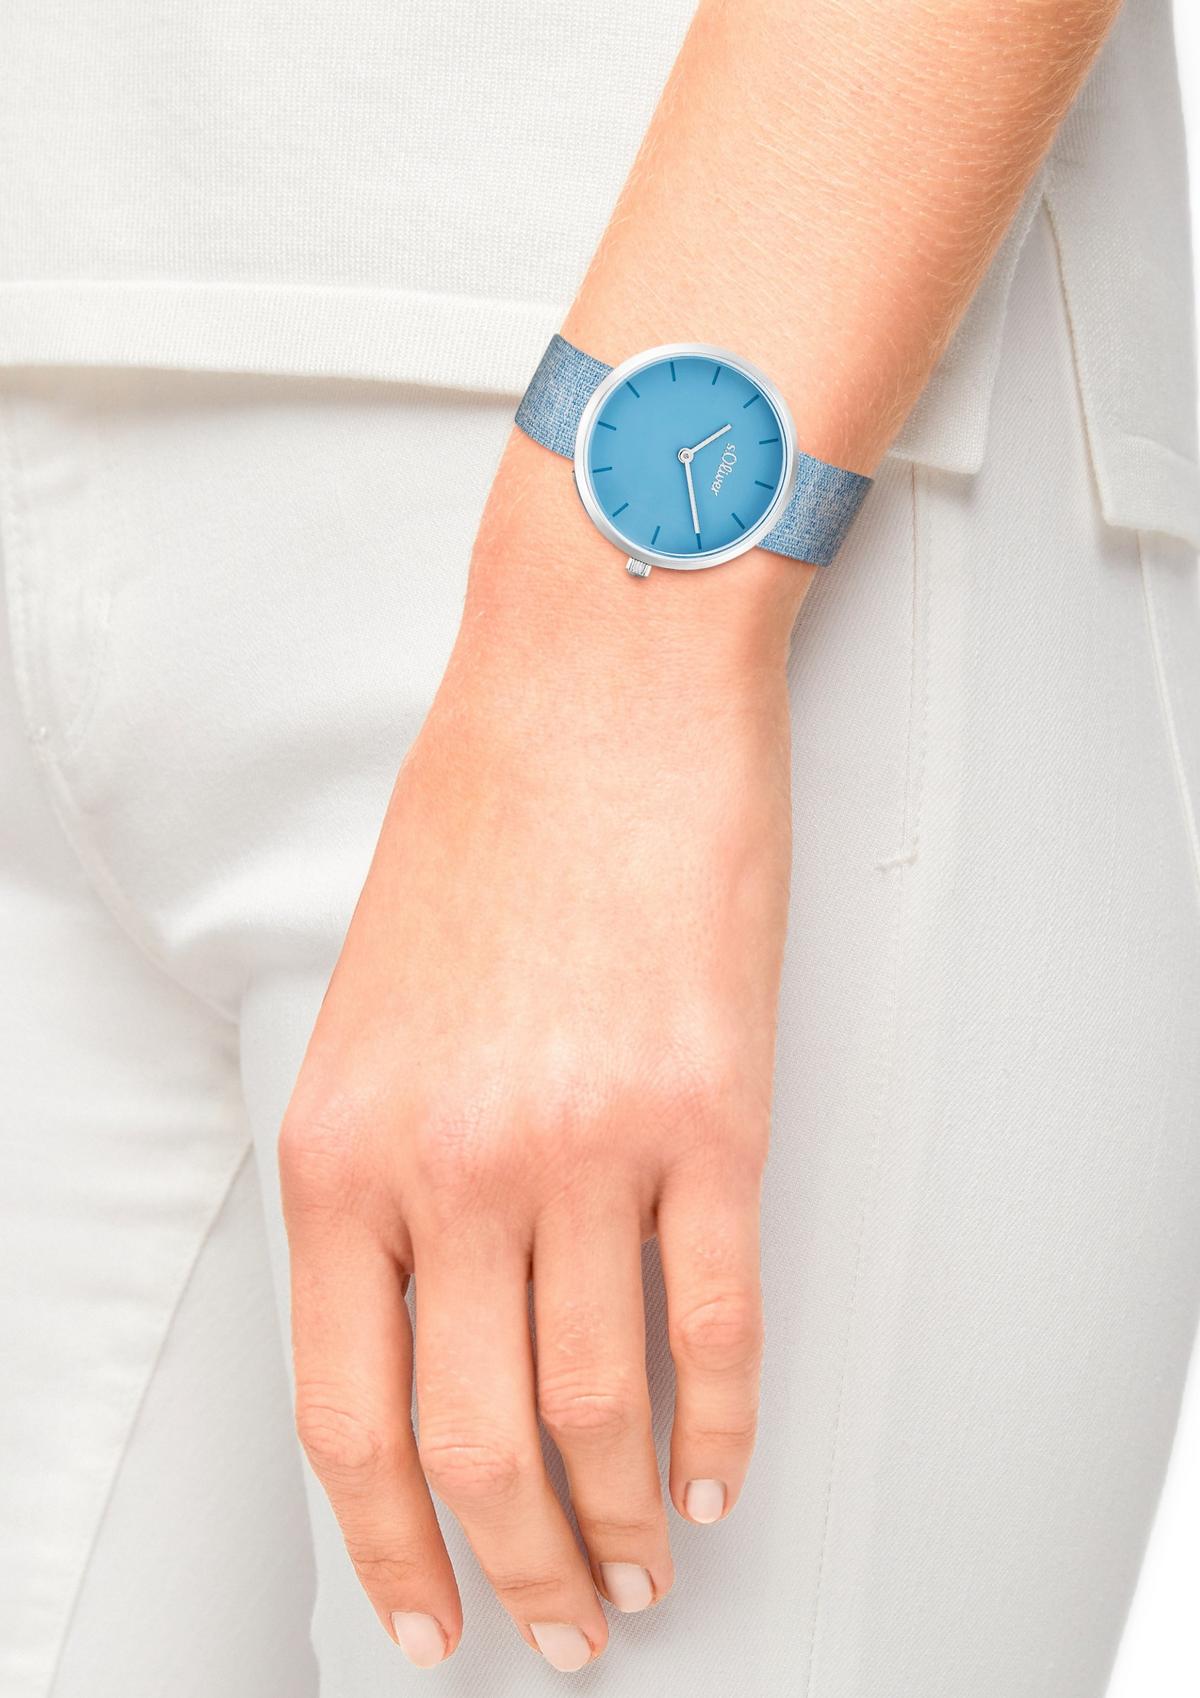 s.Oliver Blaue Armbanduhr mit Textilband